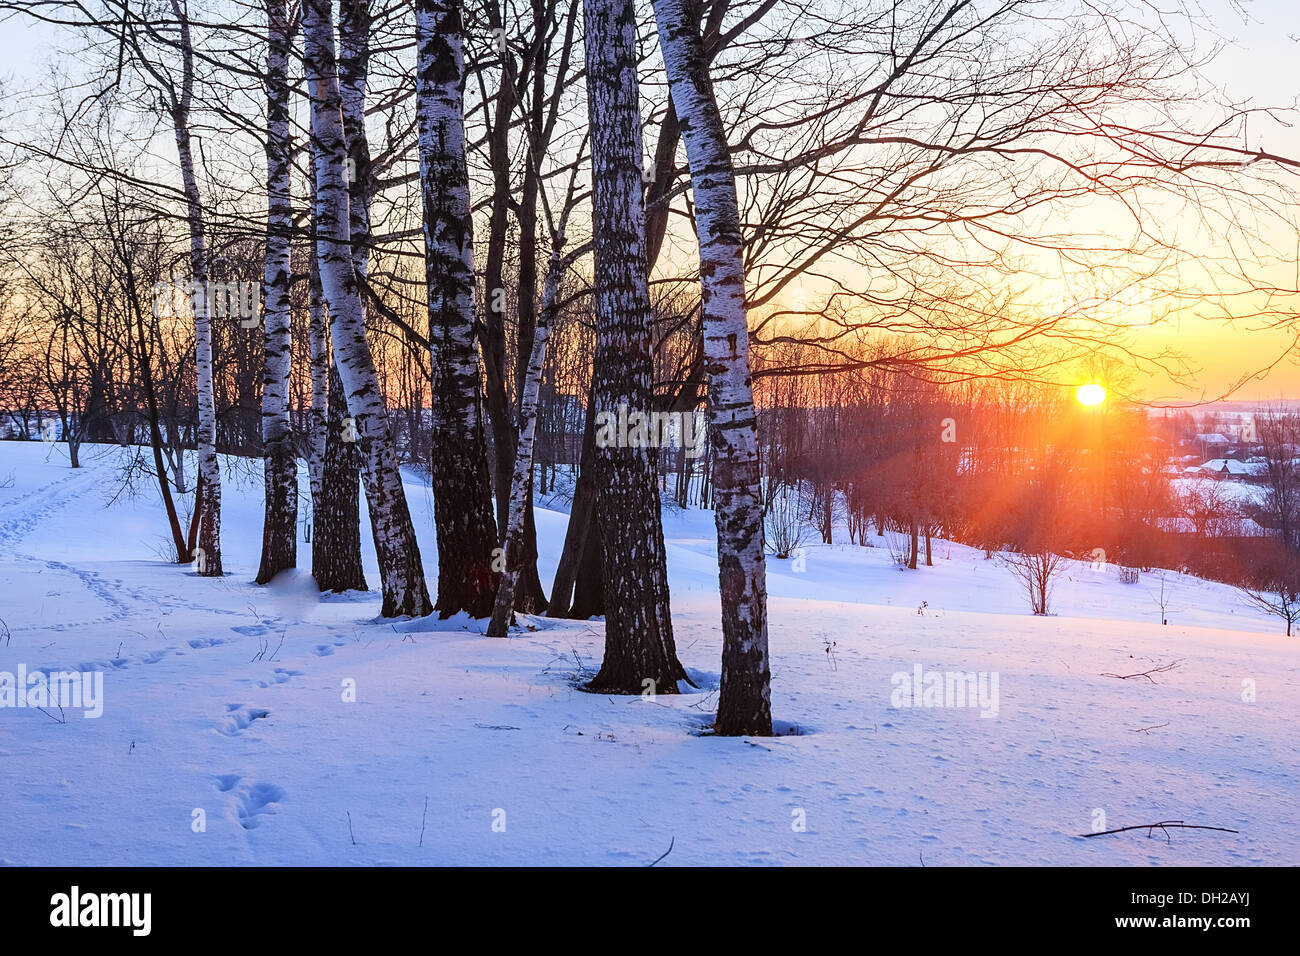 Winter park at sunset Stock Photo